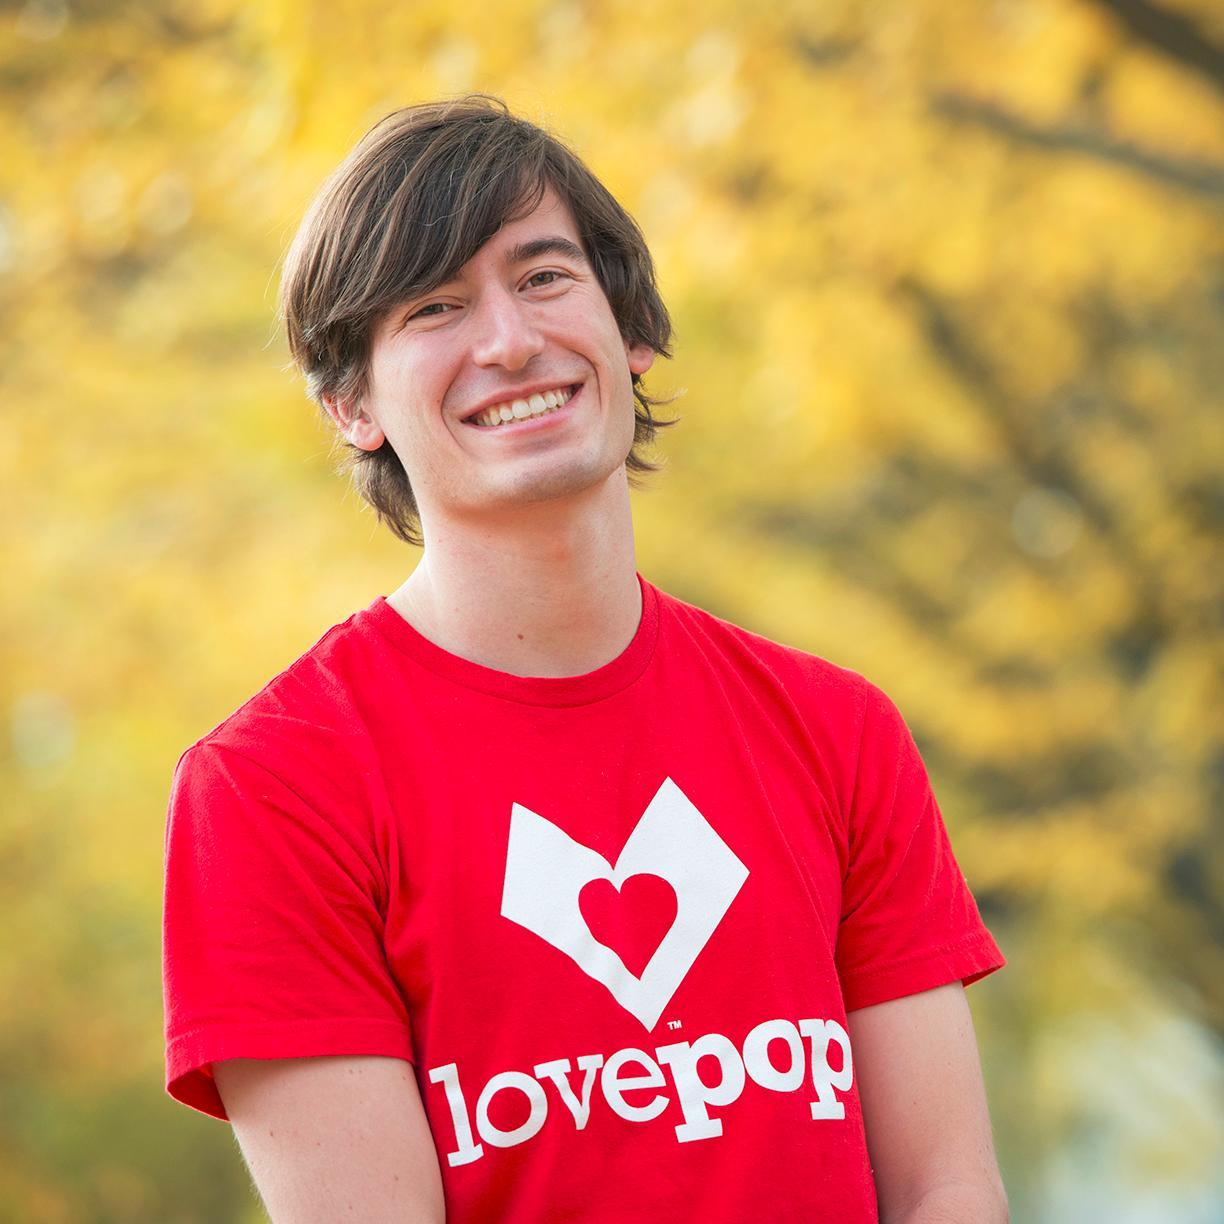 #lovepop #founder, Studied ship design @WebbInstitute, suspend disbelief